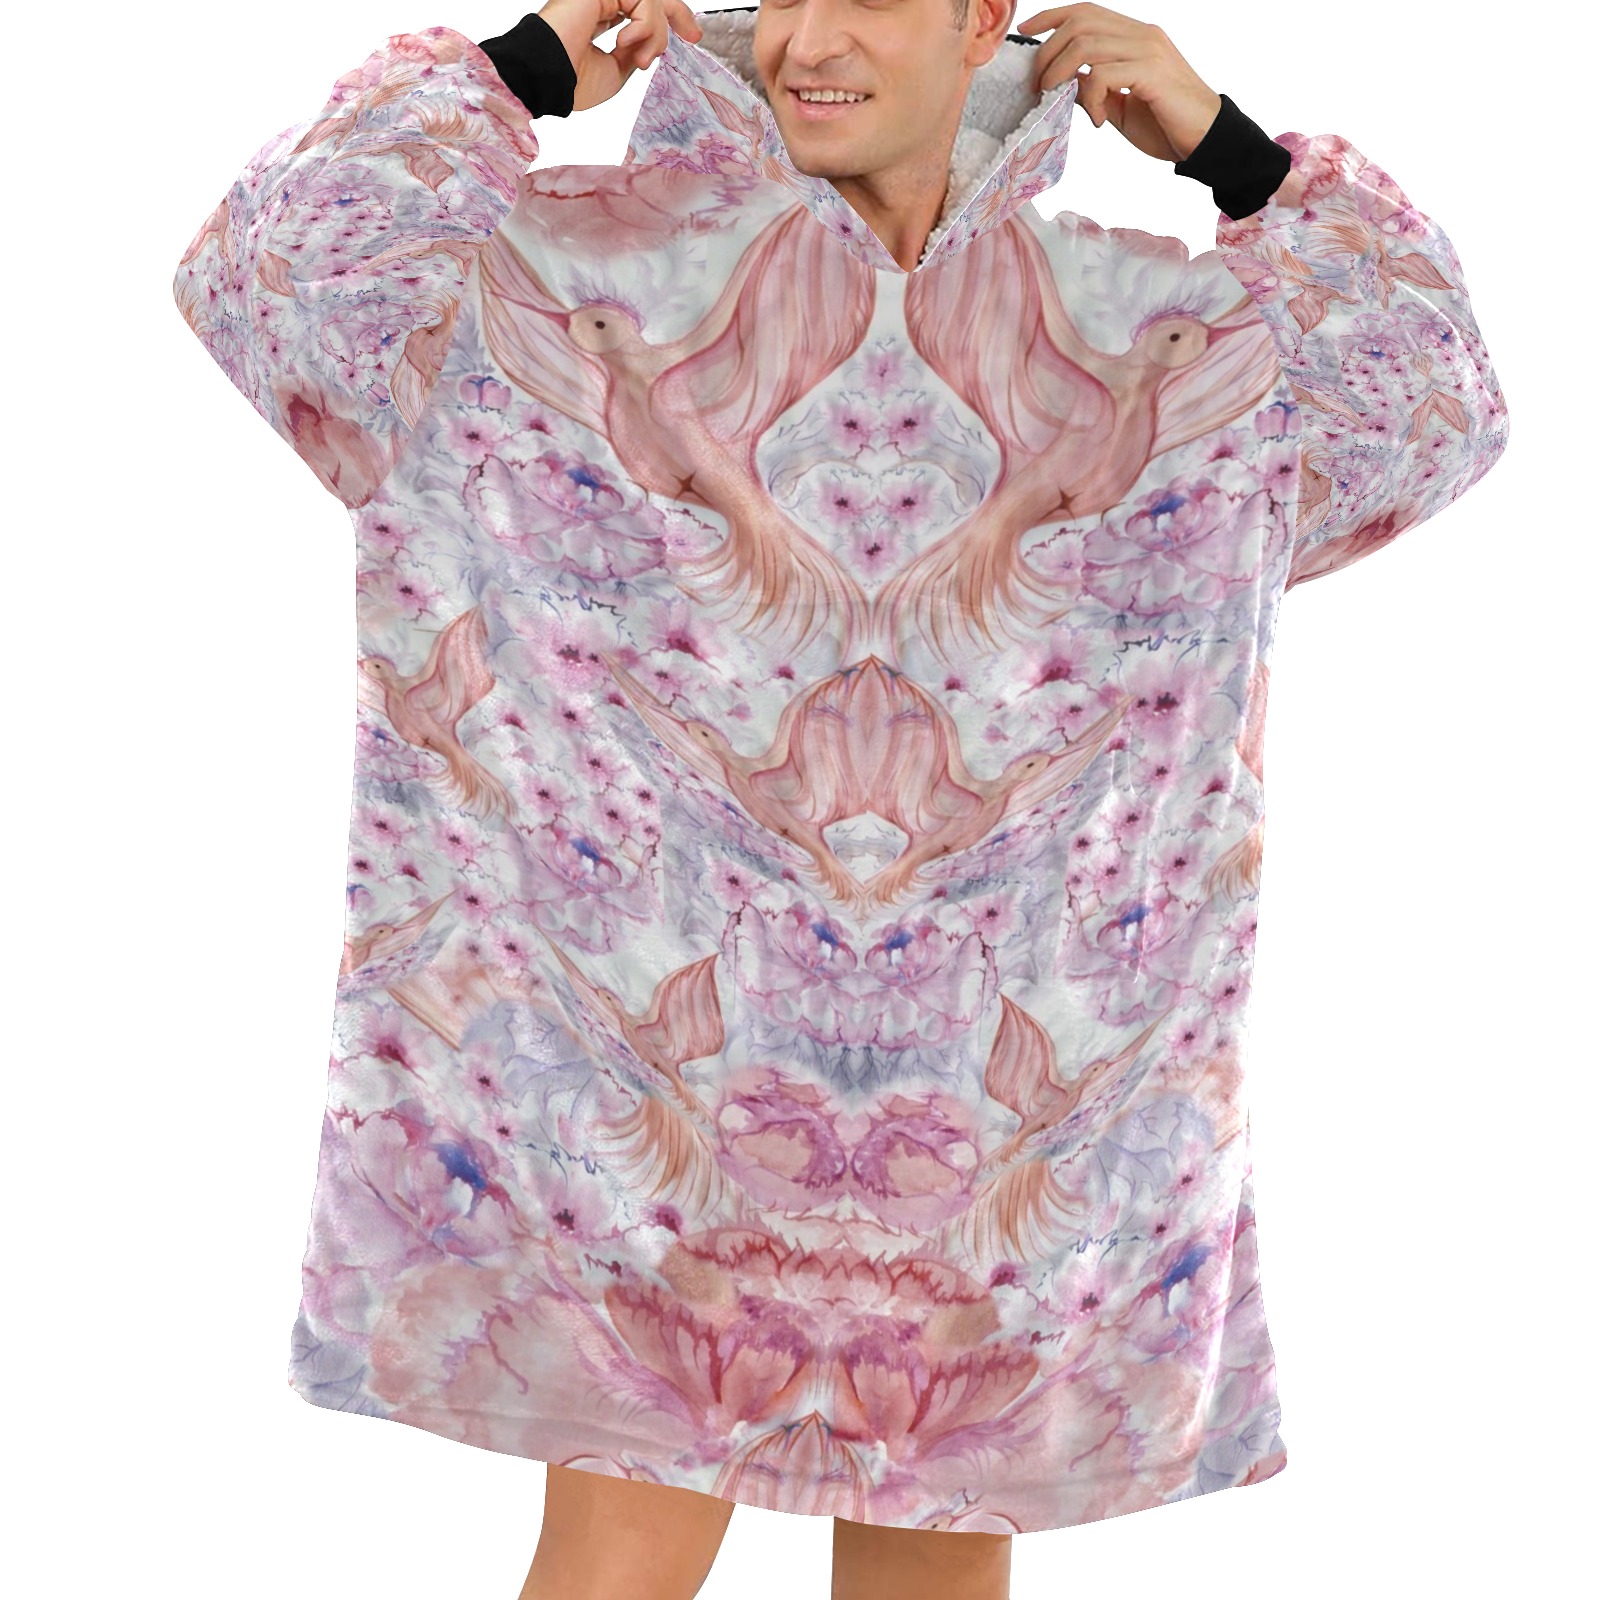 Nidhi Decembre 2014-pattern 5-6 Blanket Hoodie for Men